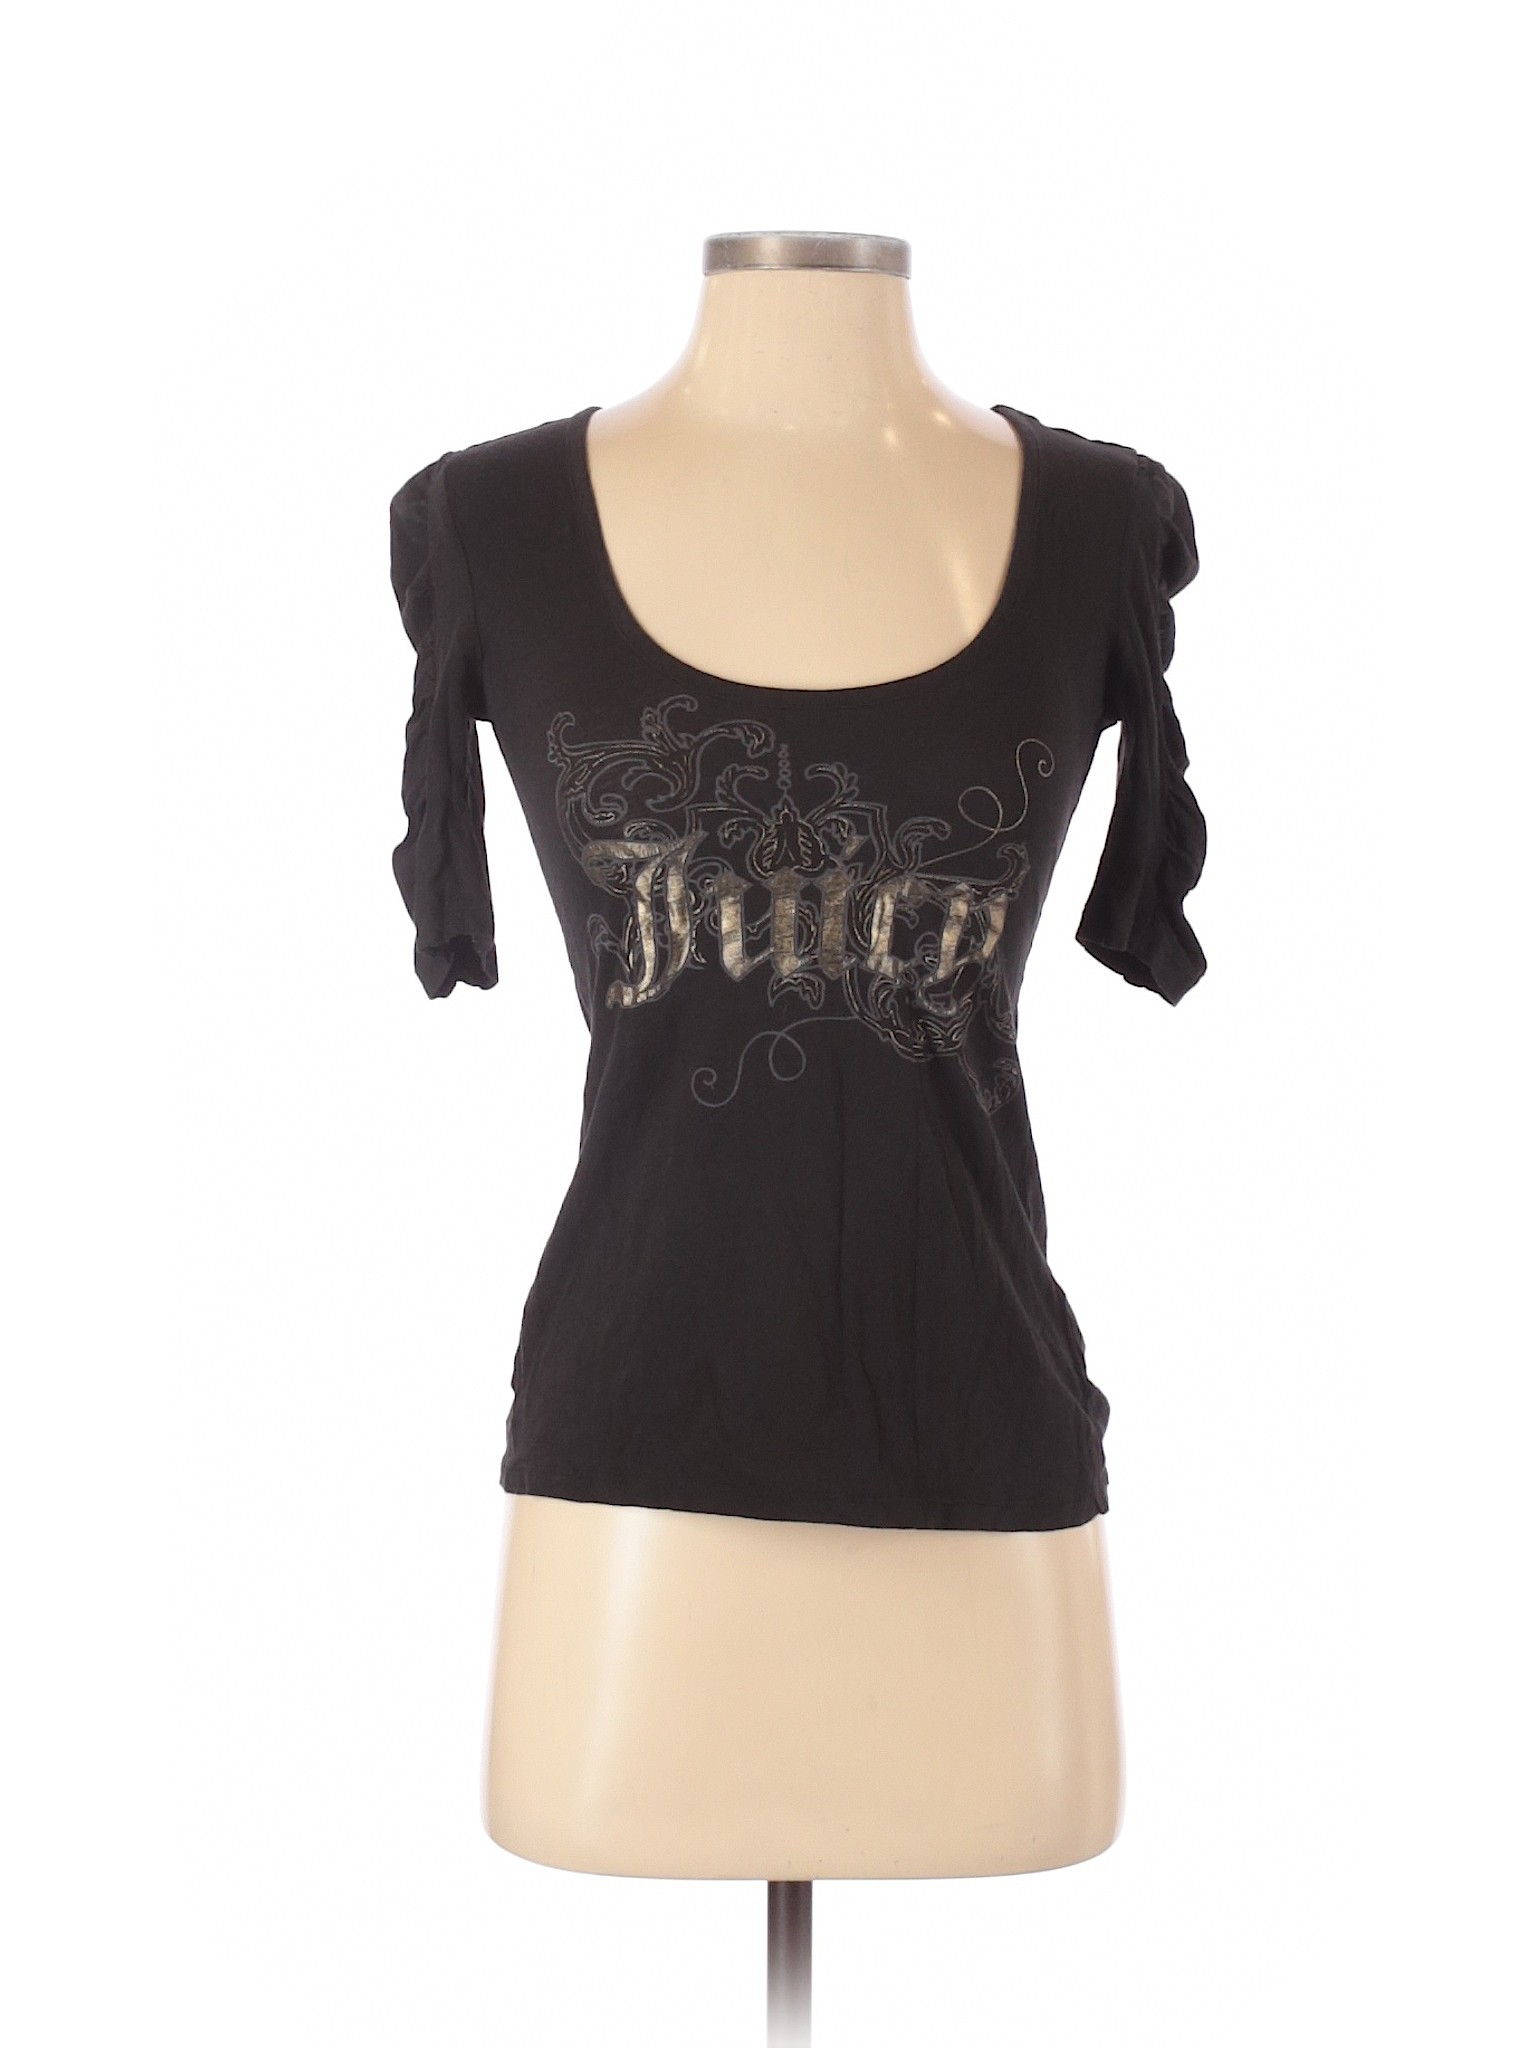 Juicy Couture Women Black 3/4 Sleeve Top P | eBay